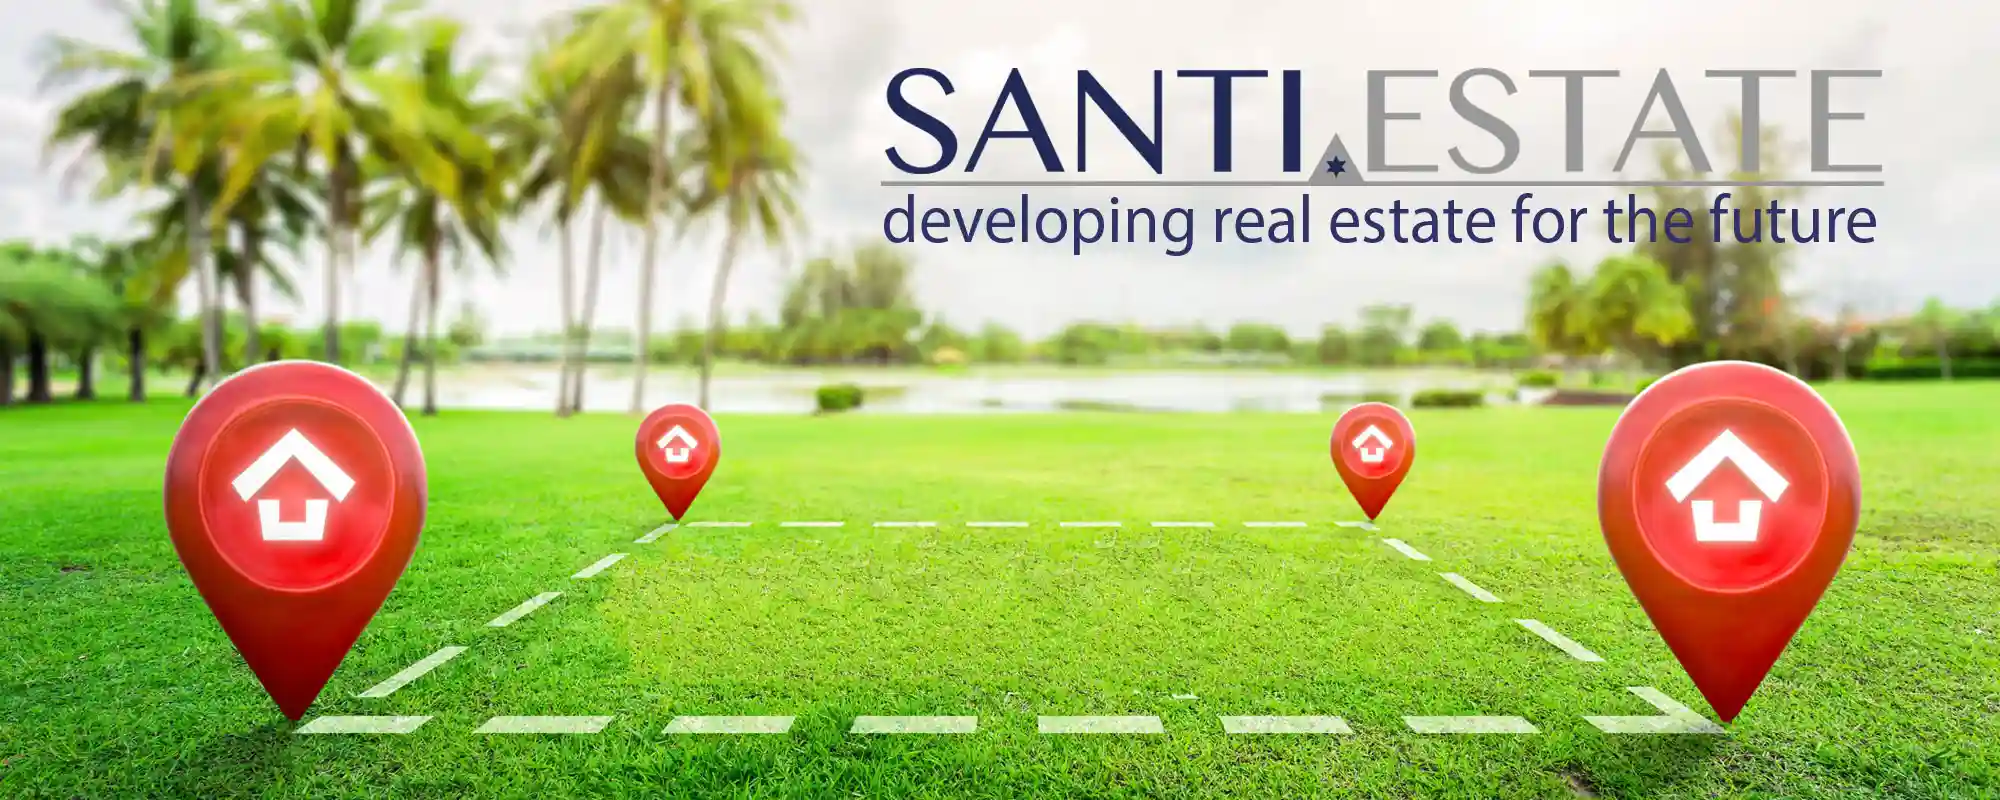 Santi-Estate Real Estate Development